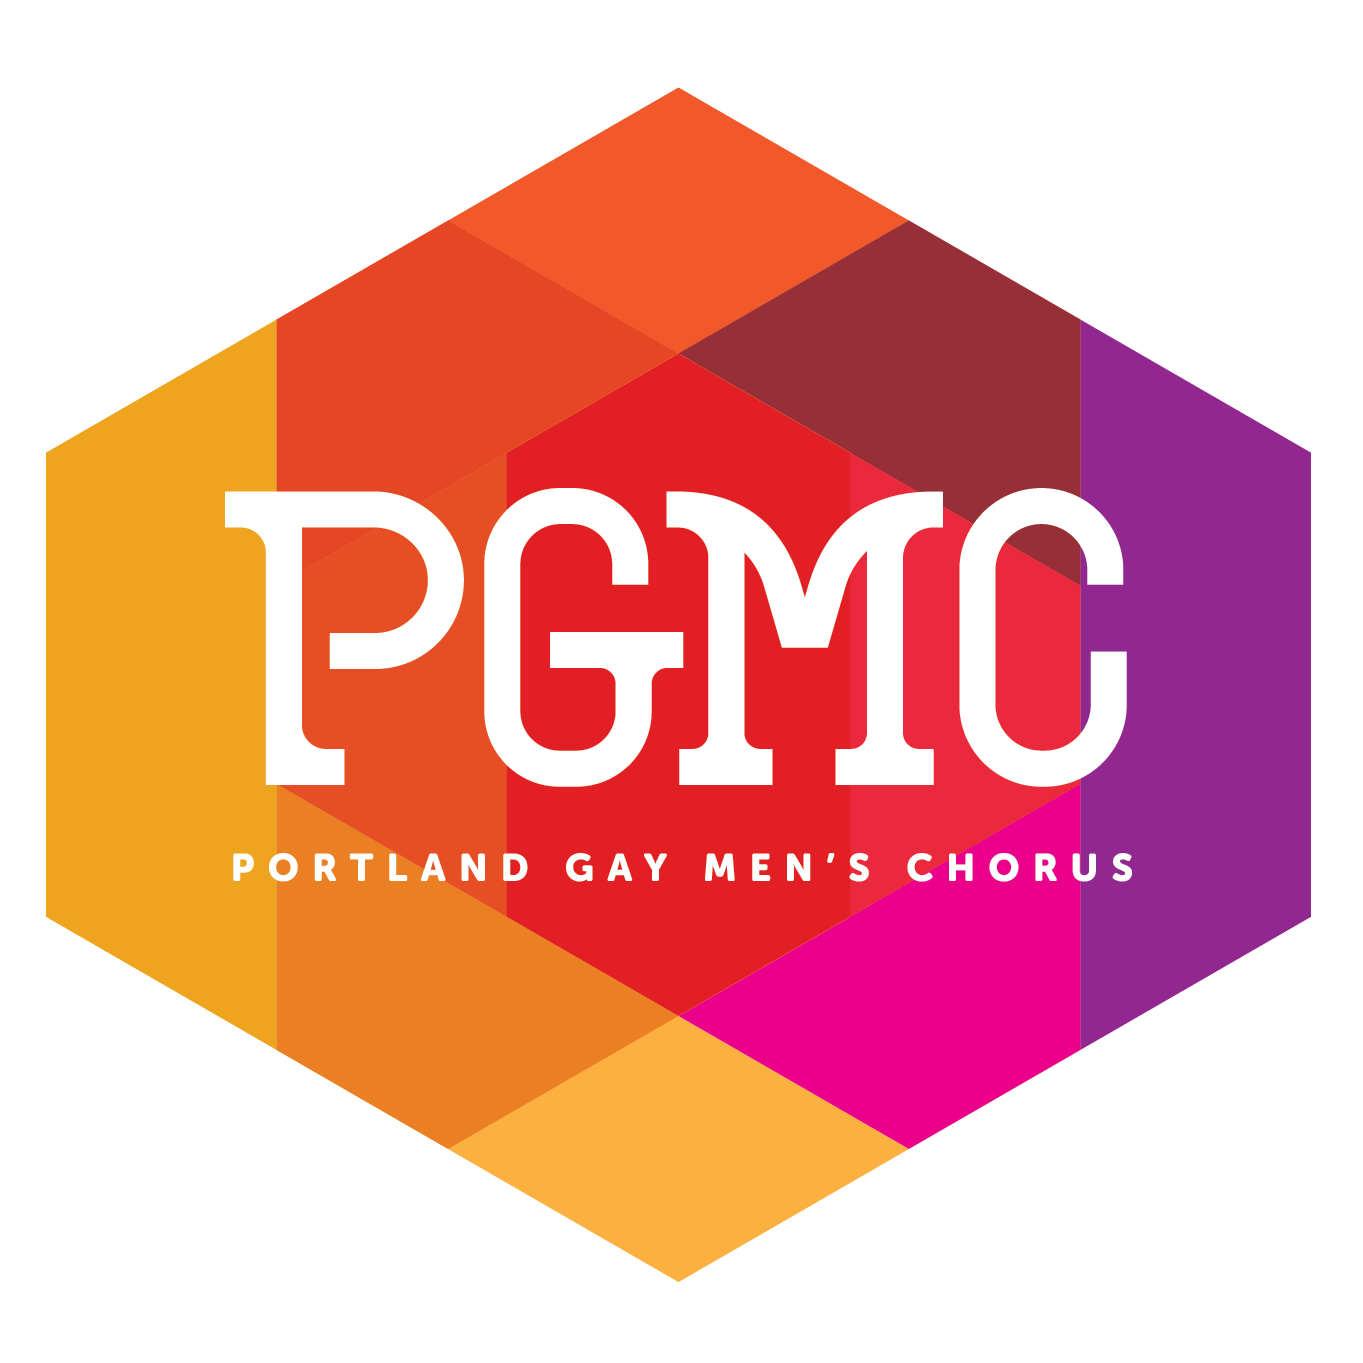   Portland Gay Men’s Choir  